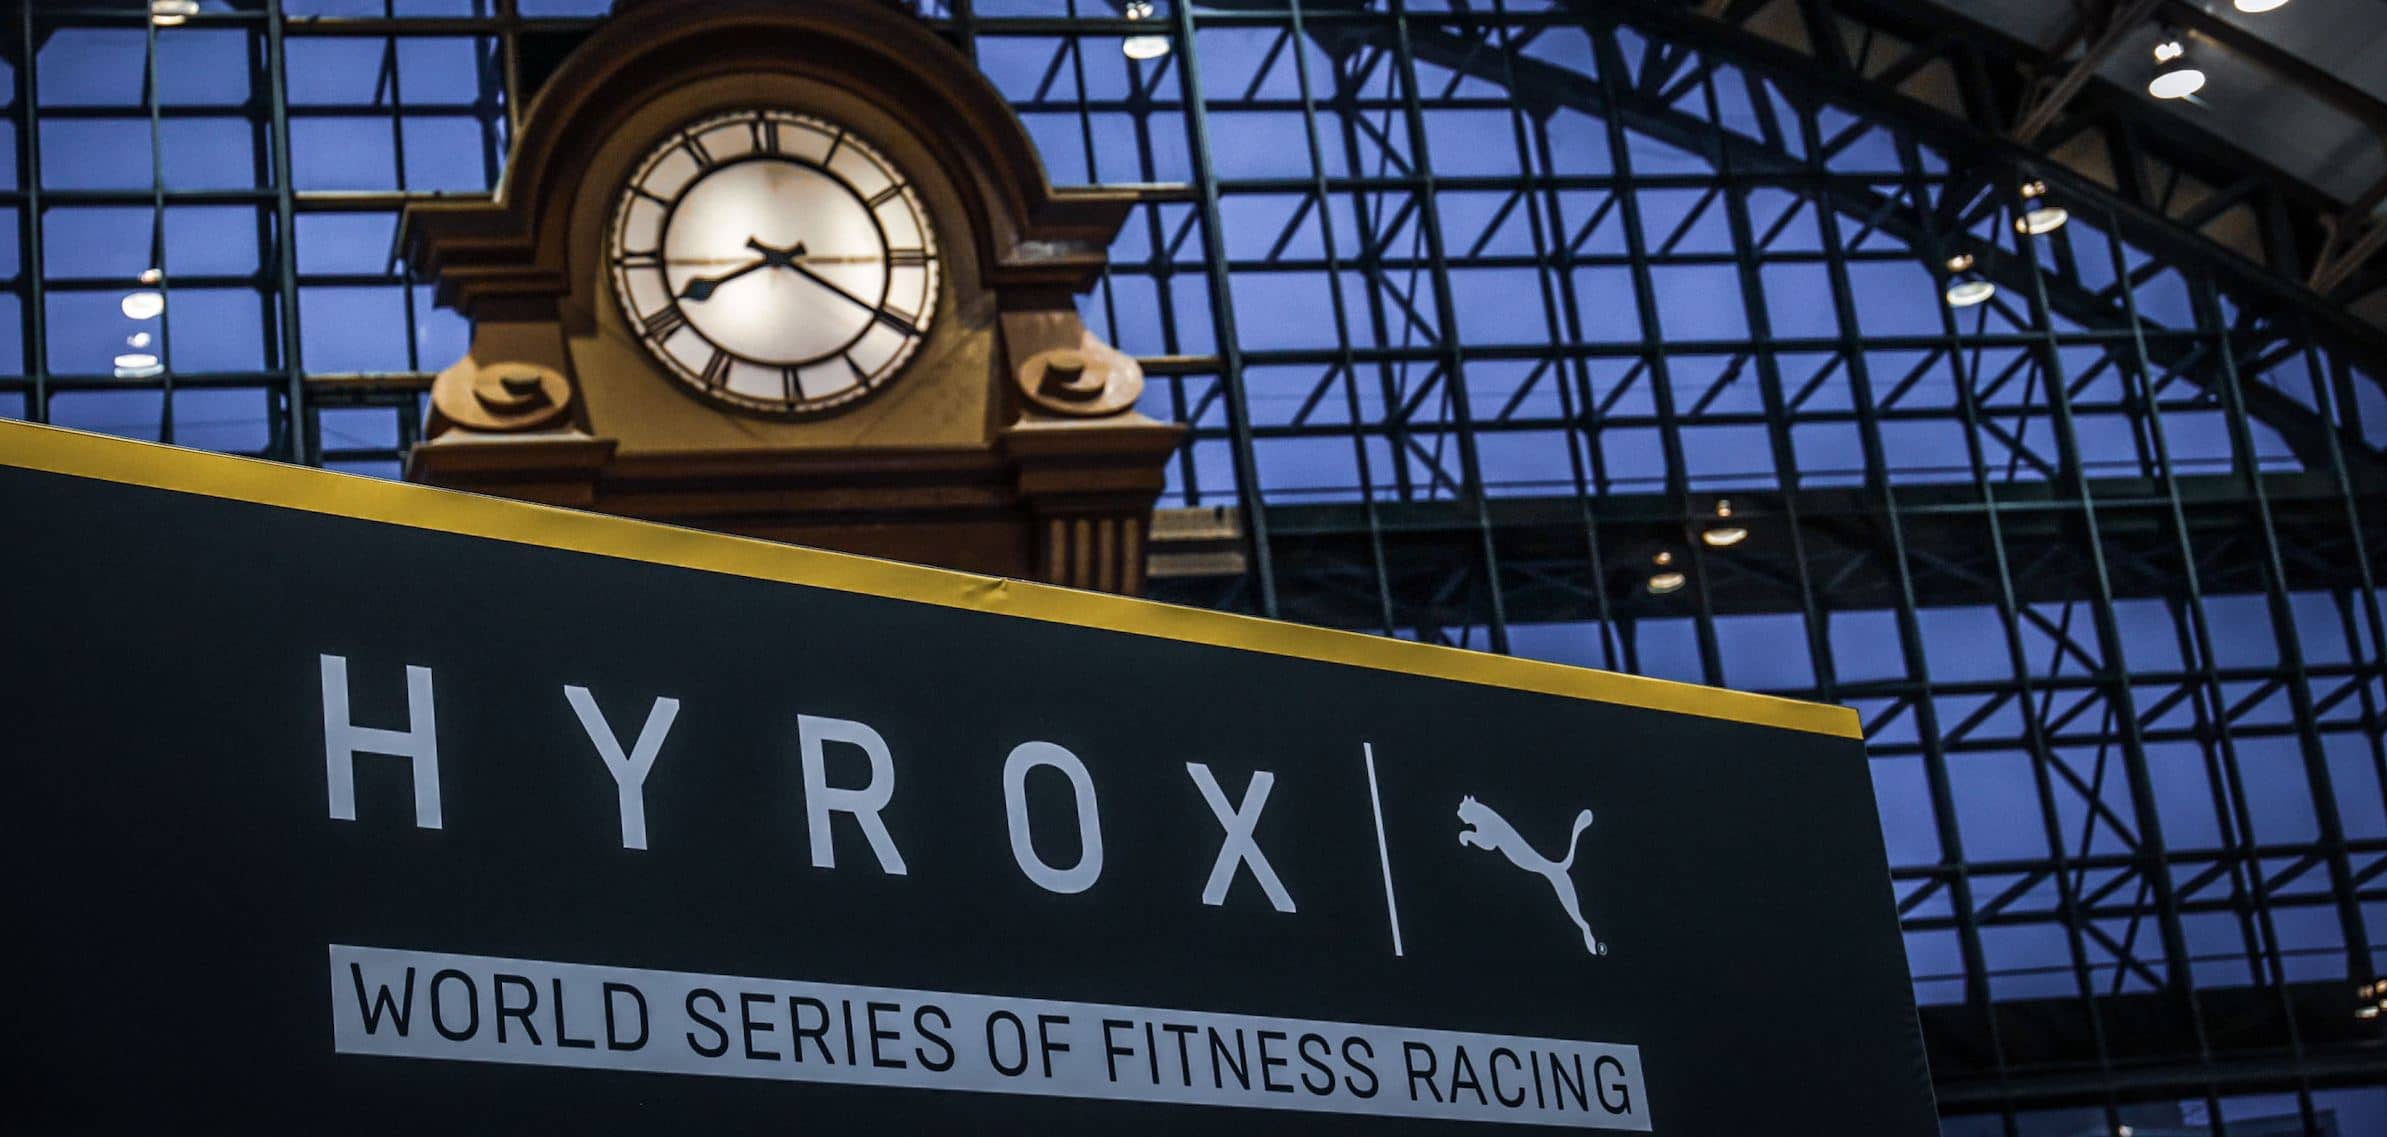 Hyrox logo below clock